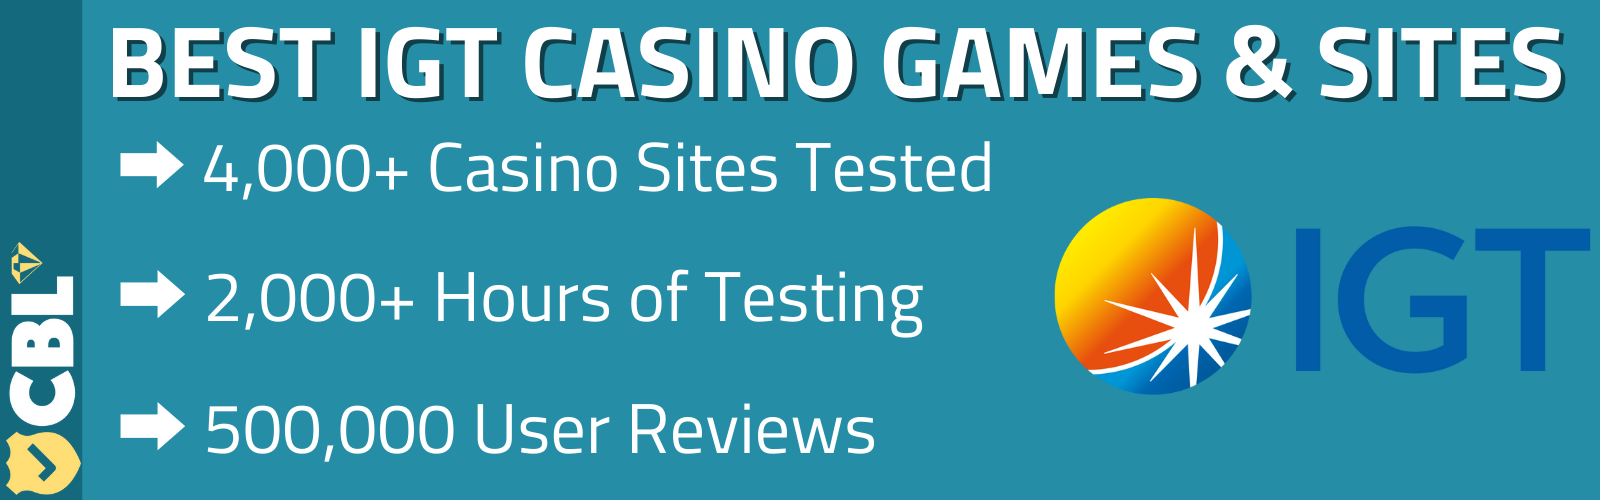 BEST IGT CASINO GAMES & SITES